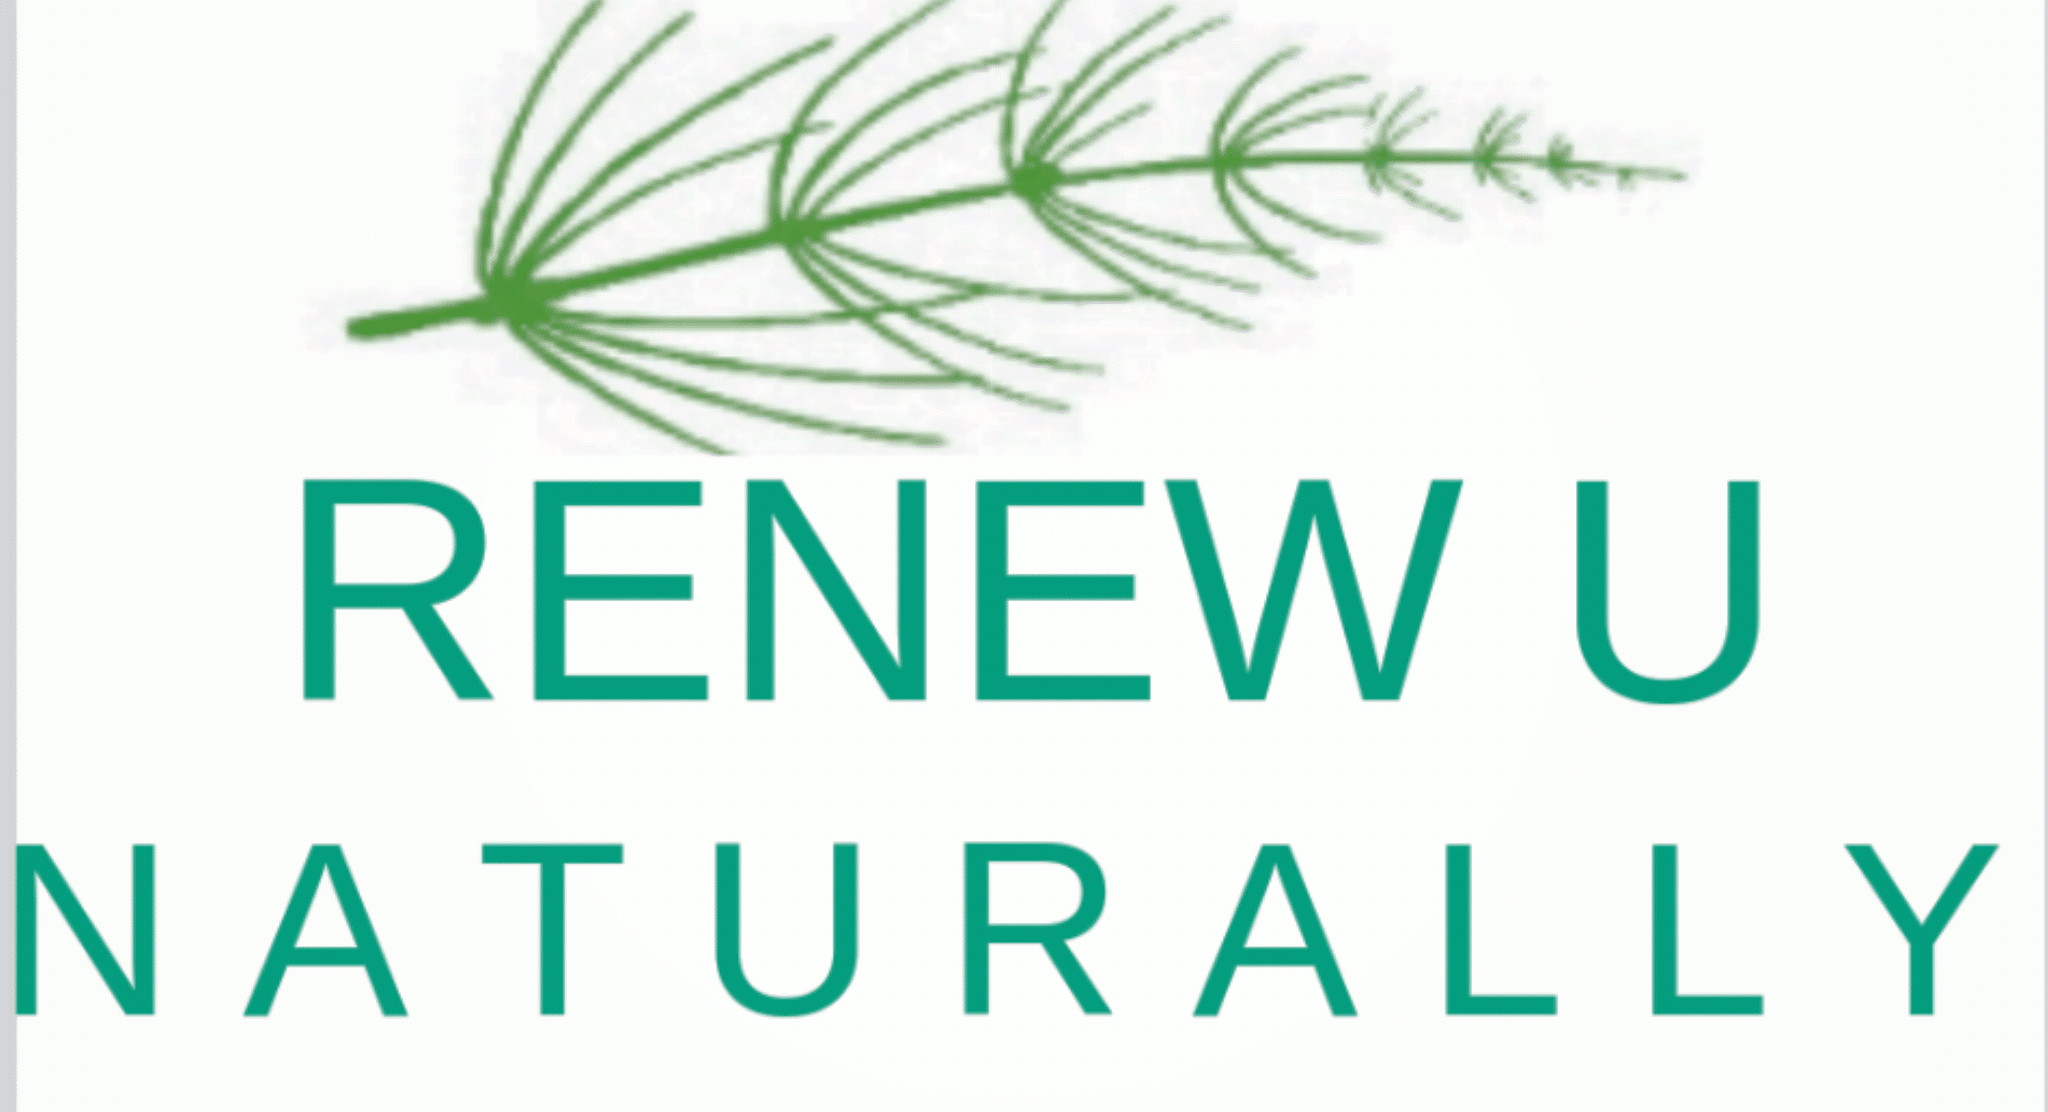 Renew U Naturally Inc